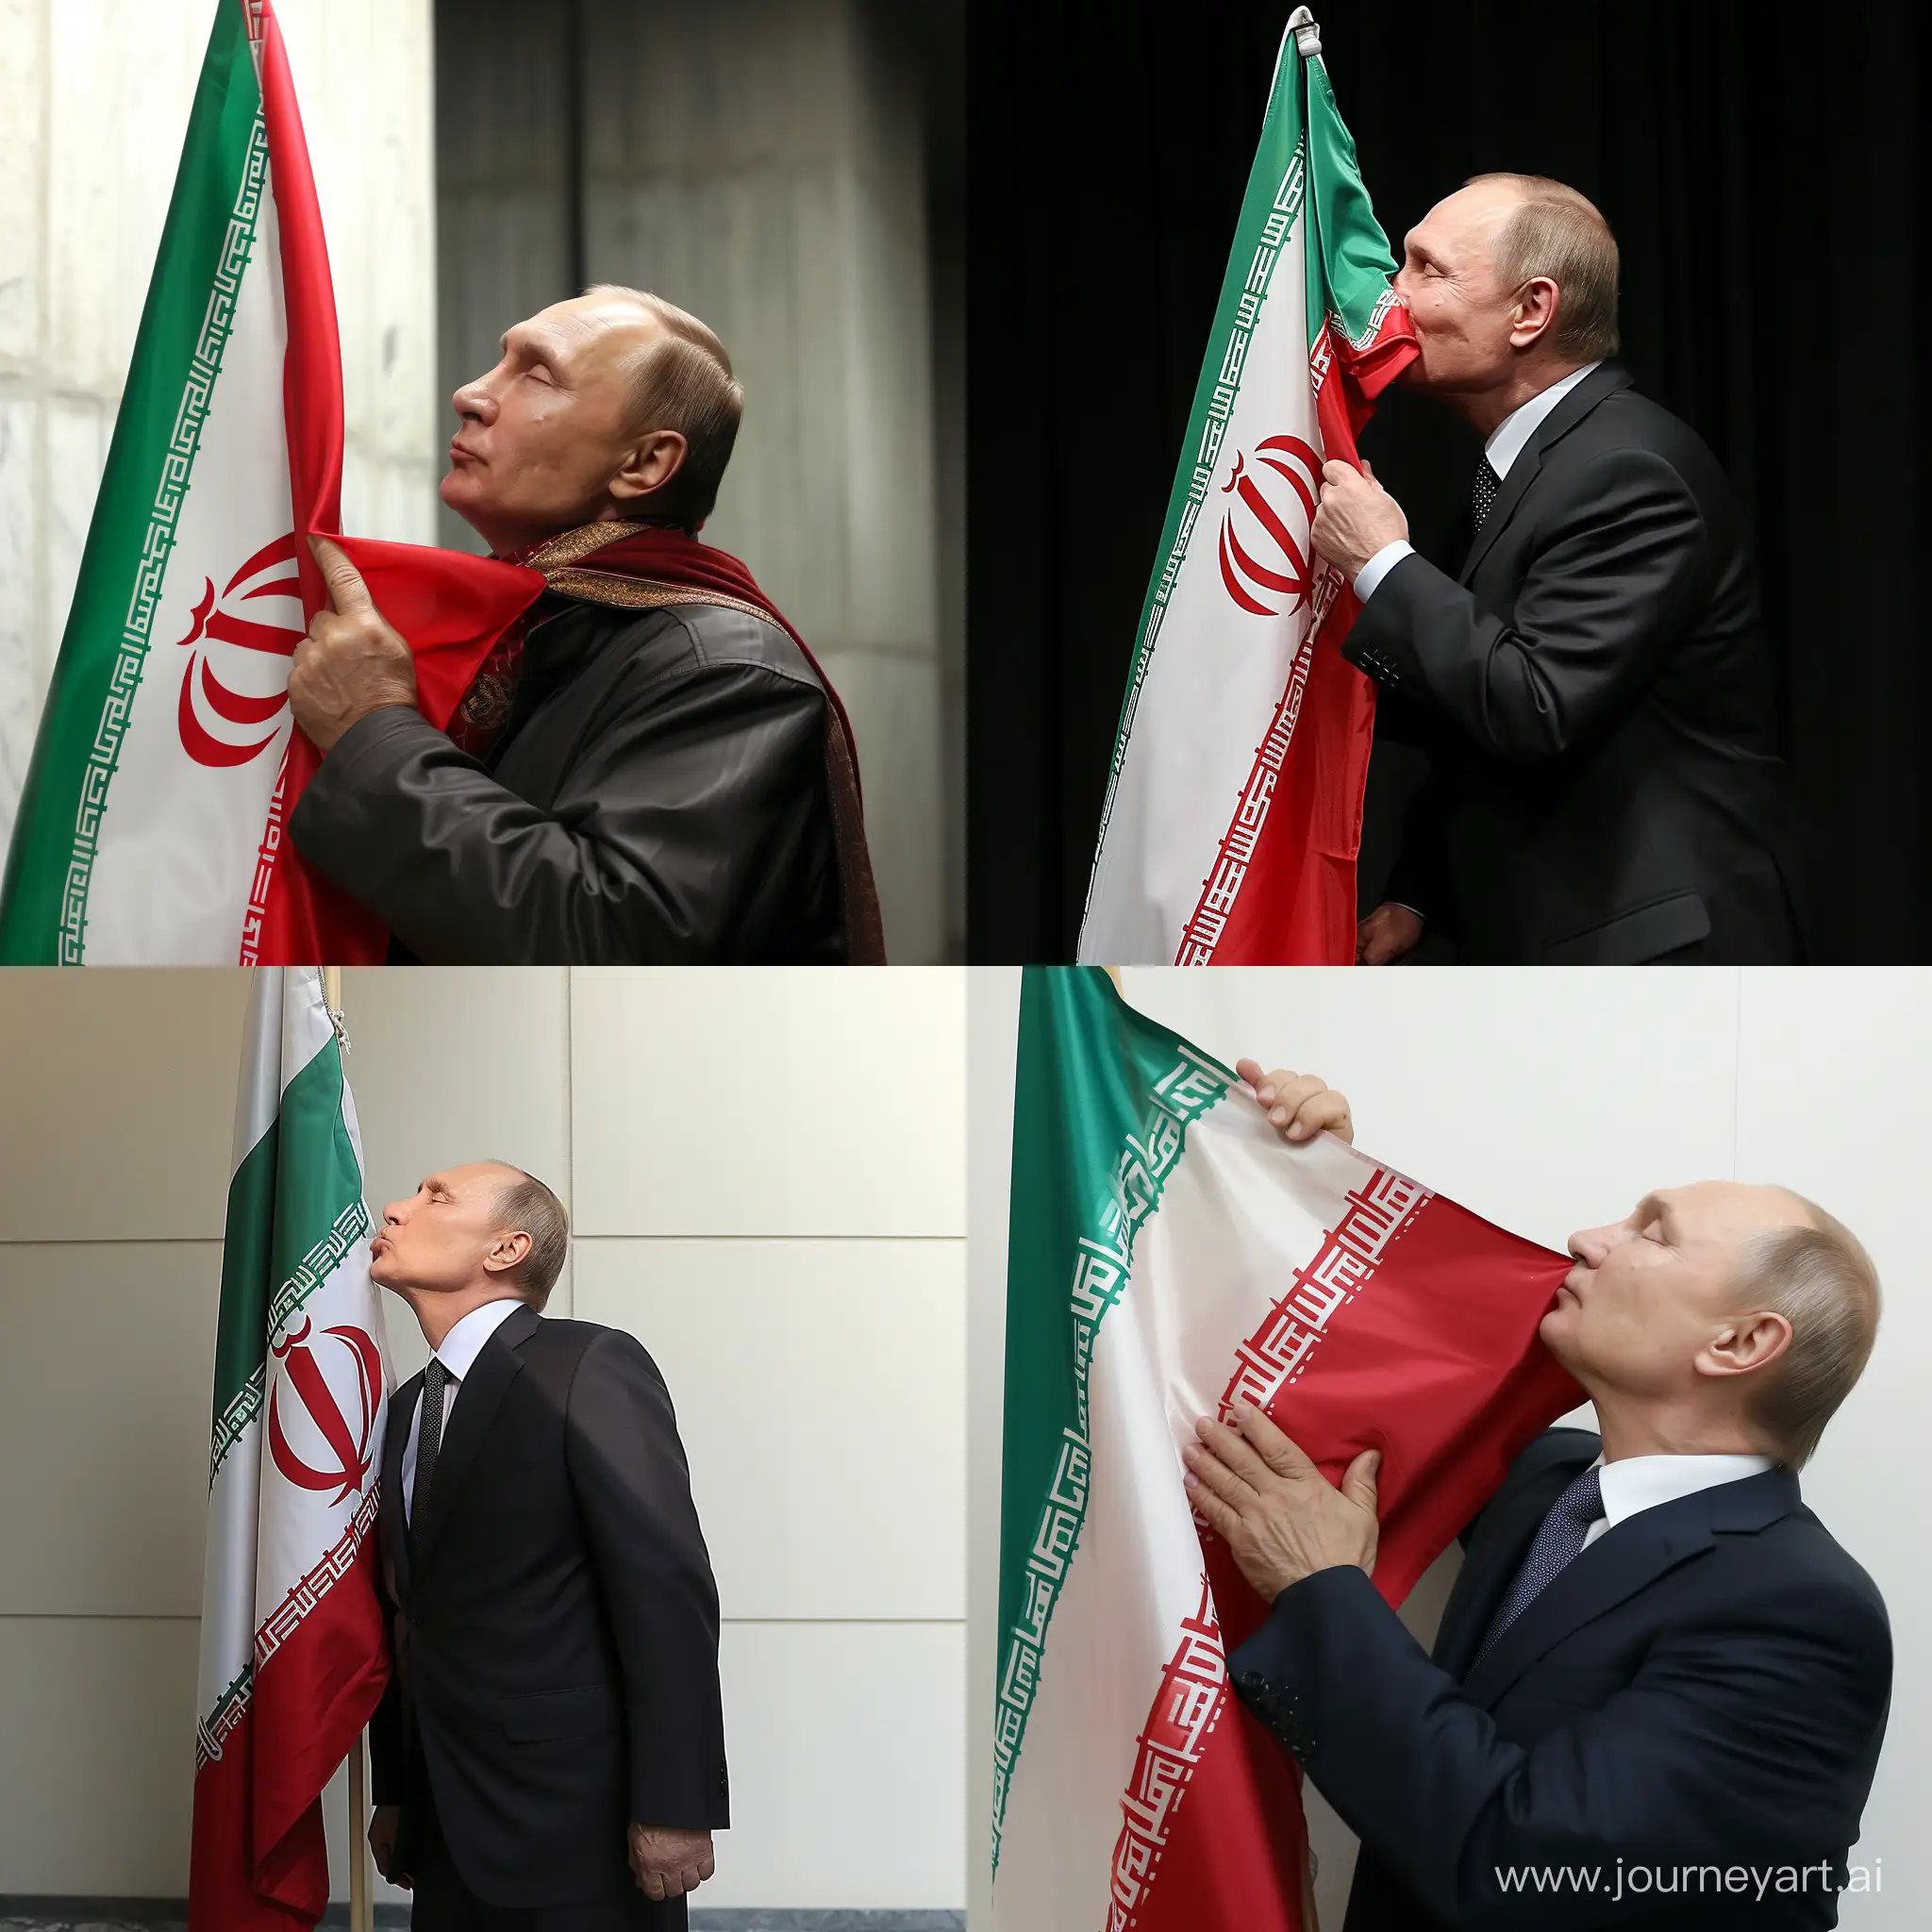 Vladimir-Putin-Kissing-Iran-Flag-in-High-Realistic-64K-Resolution